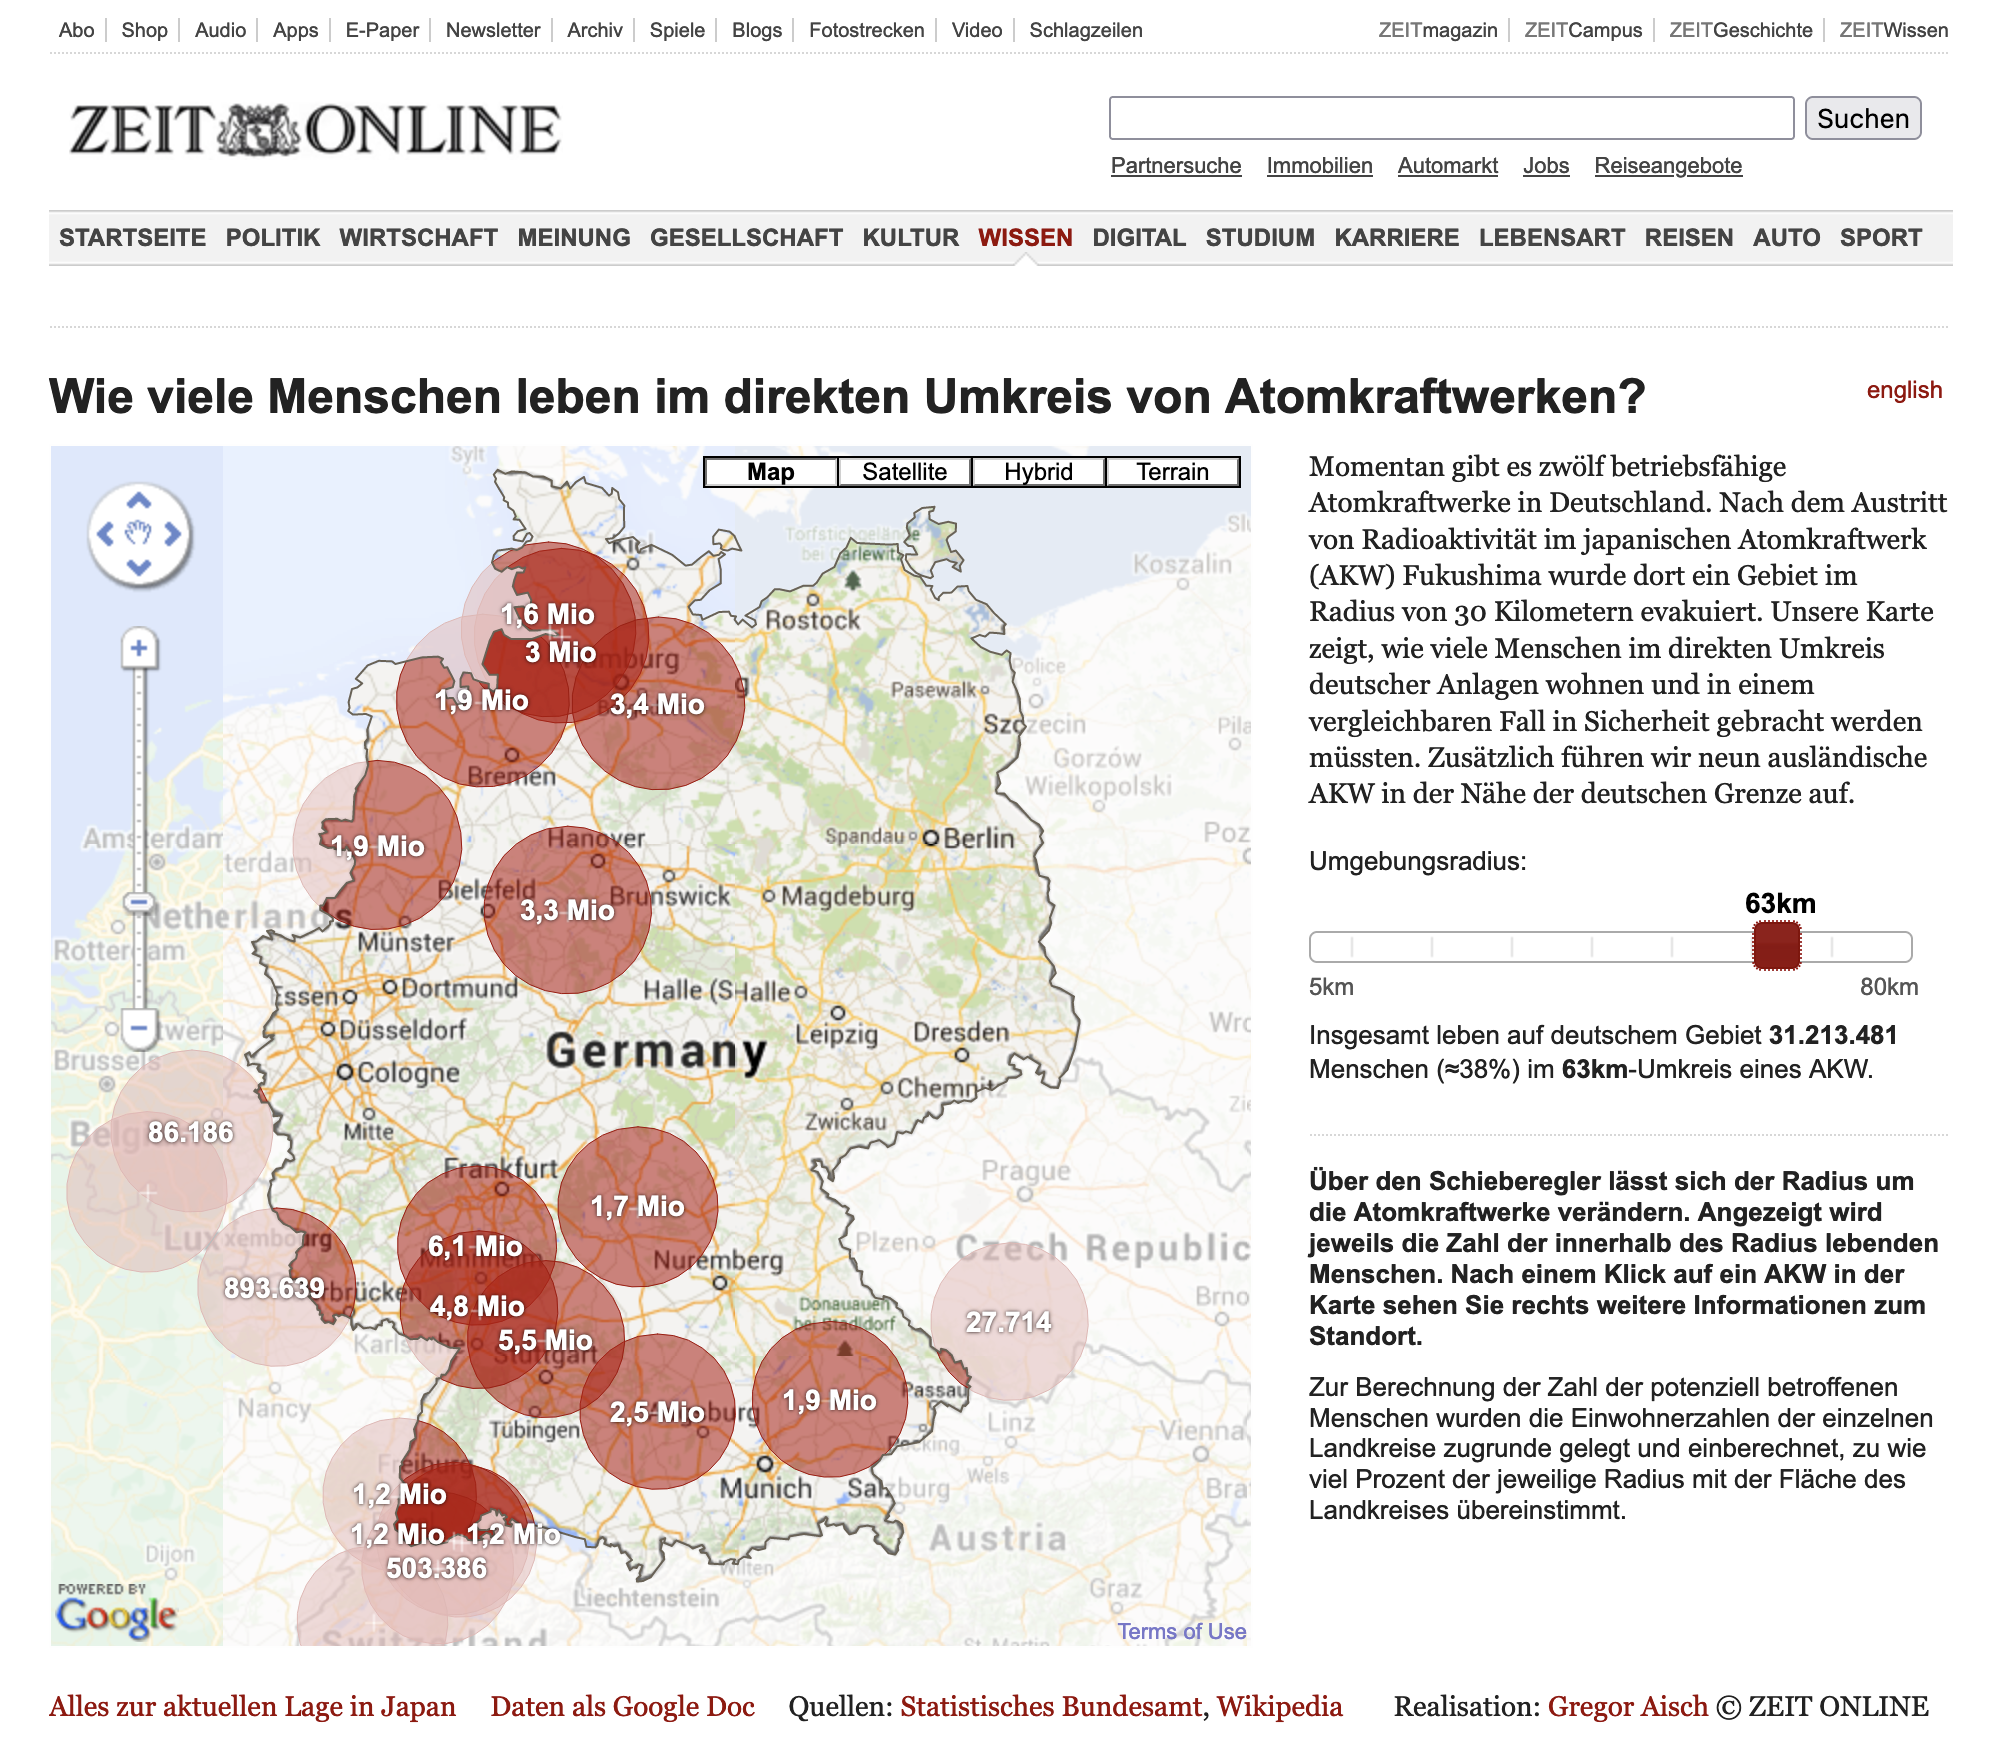 Population near Nuclear Reactors in Germany